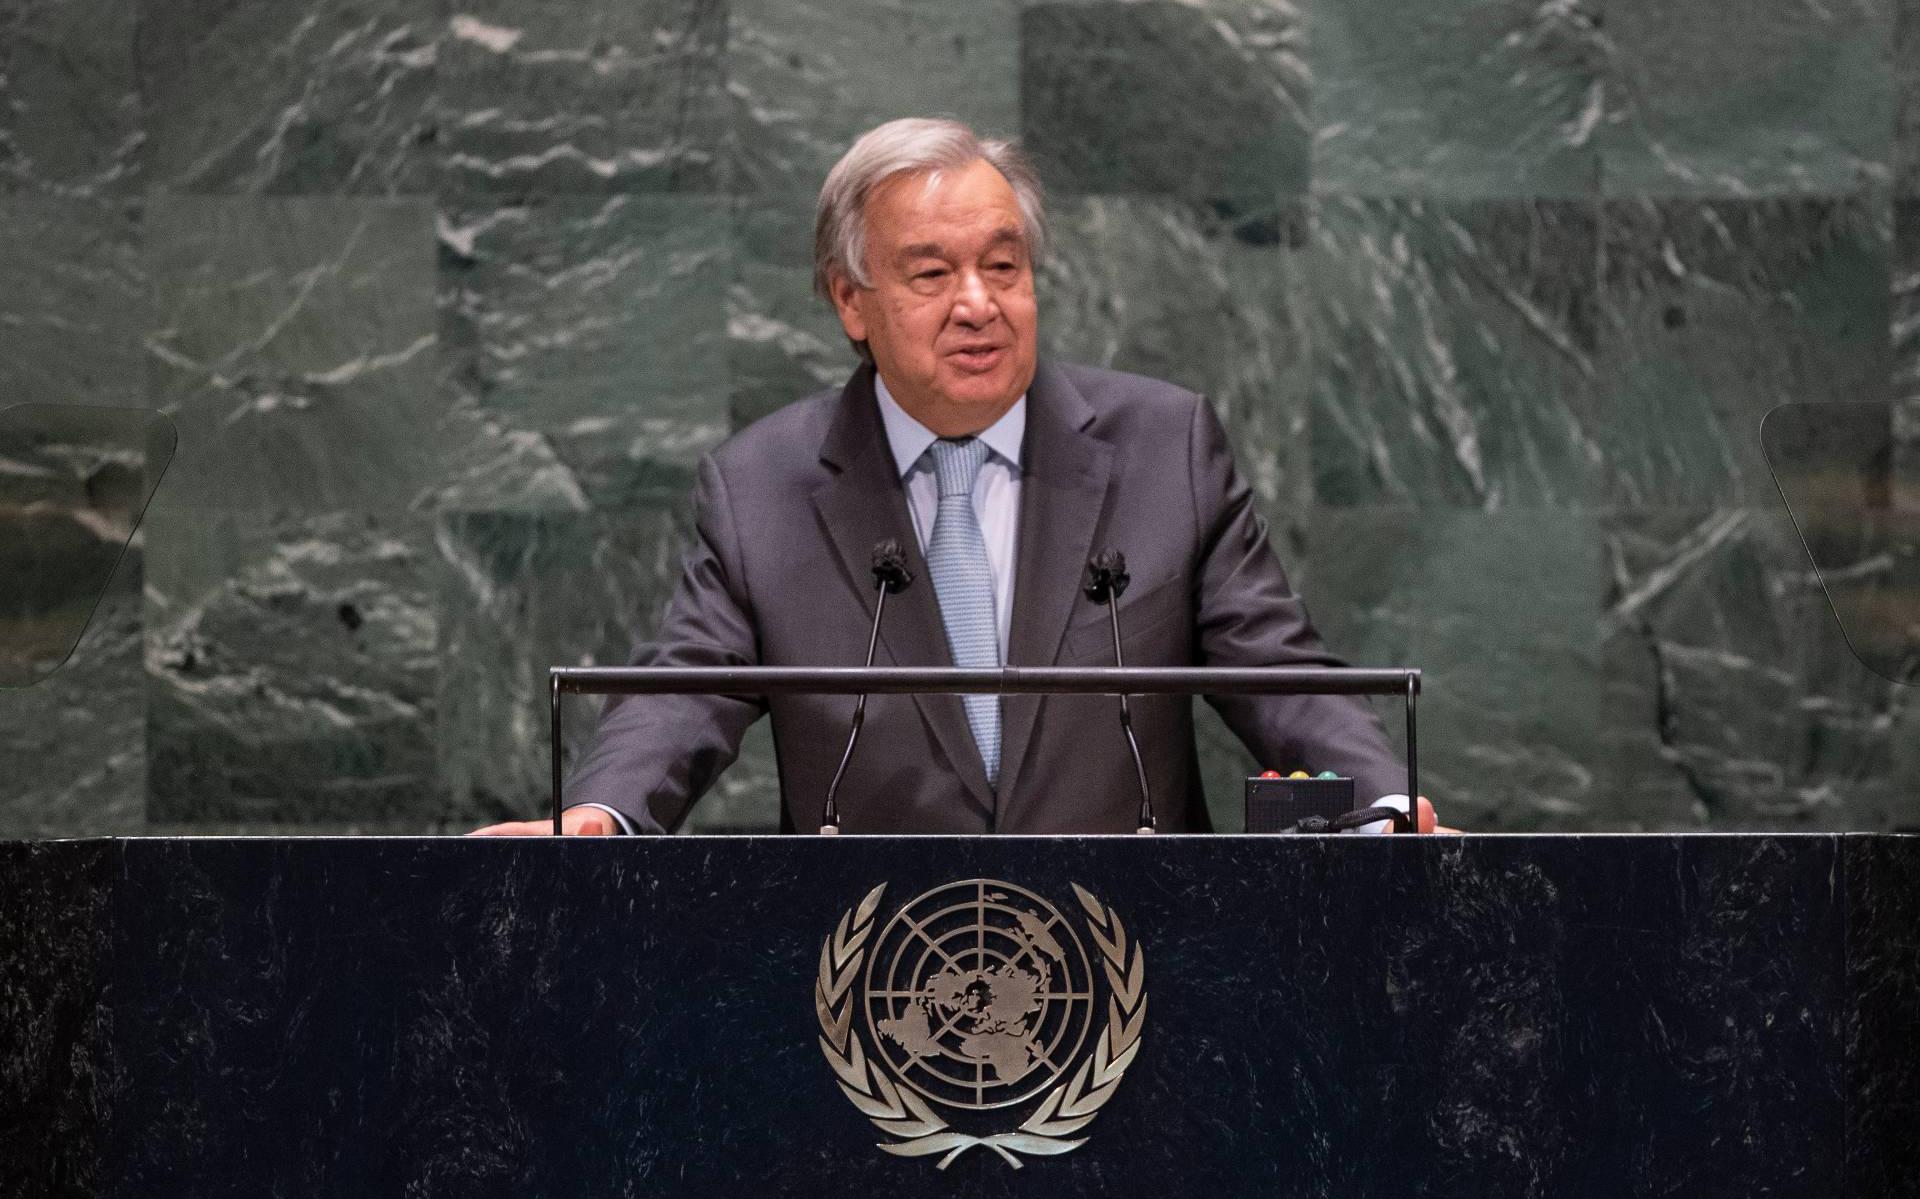 VN-chef Guterres buitengewoon bezorgd over Nagorno-Karabach